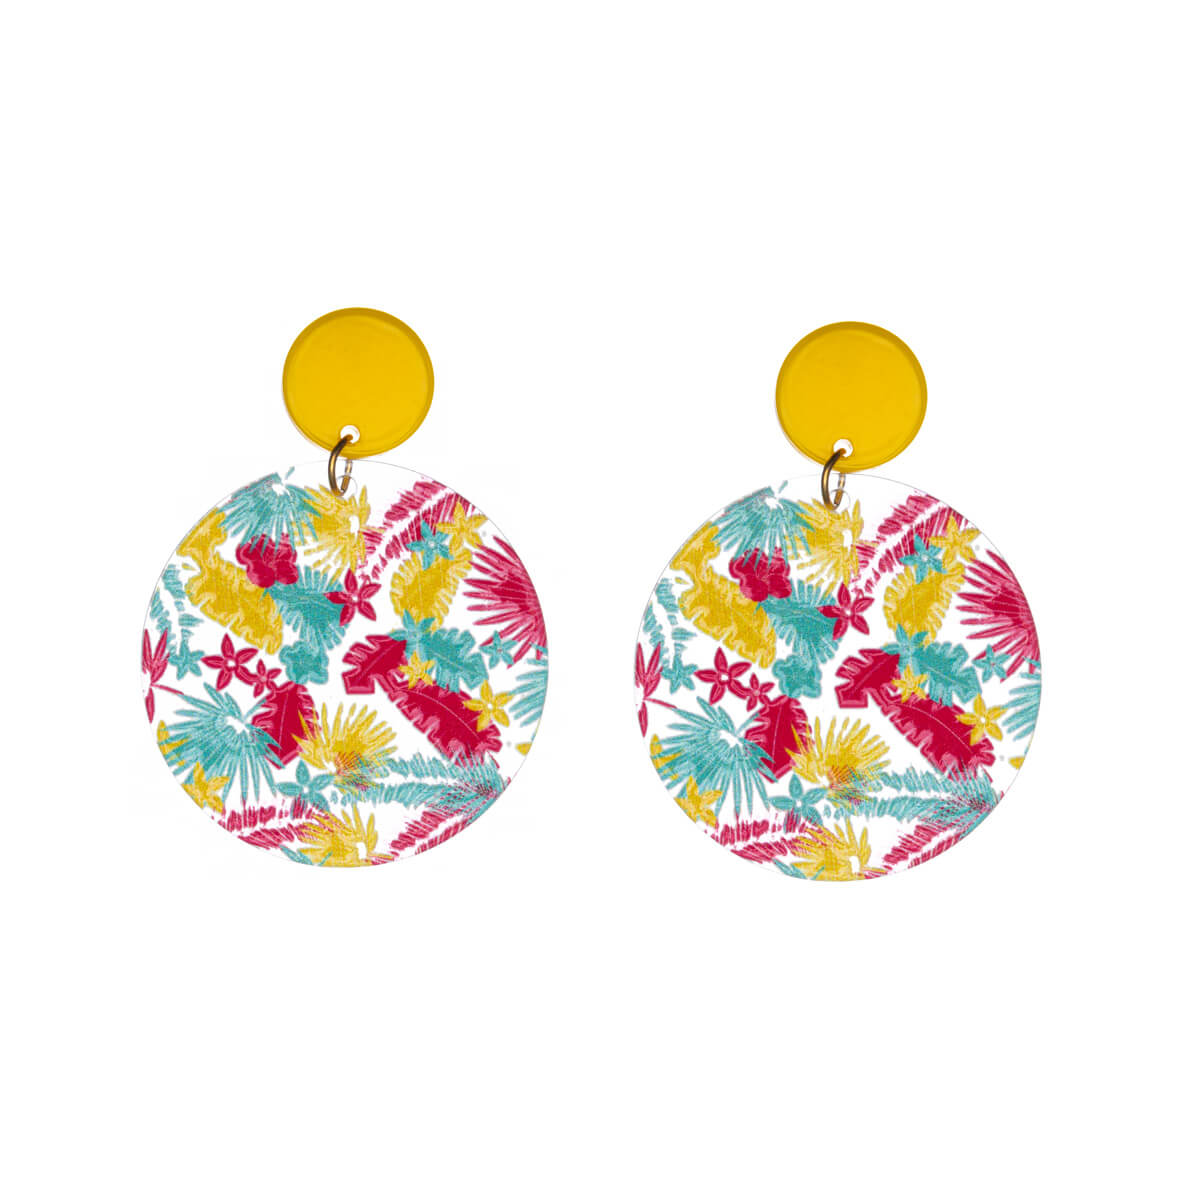 Round tropical earrings